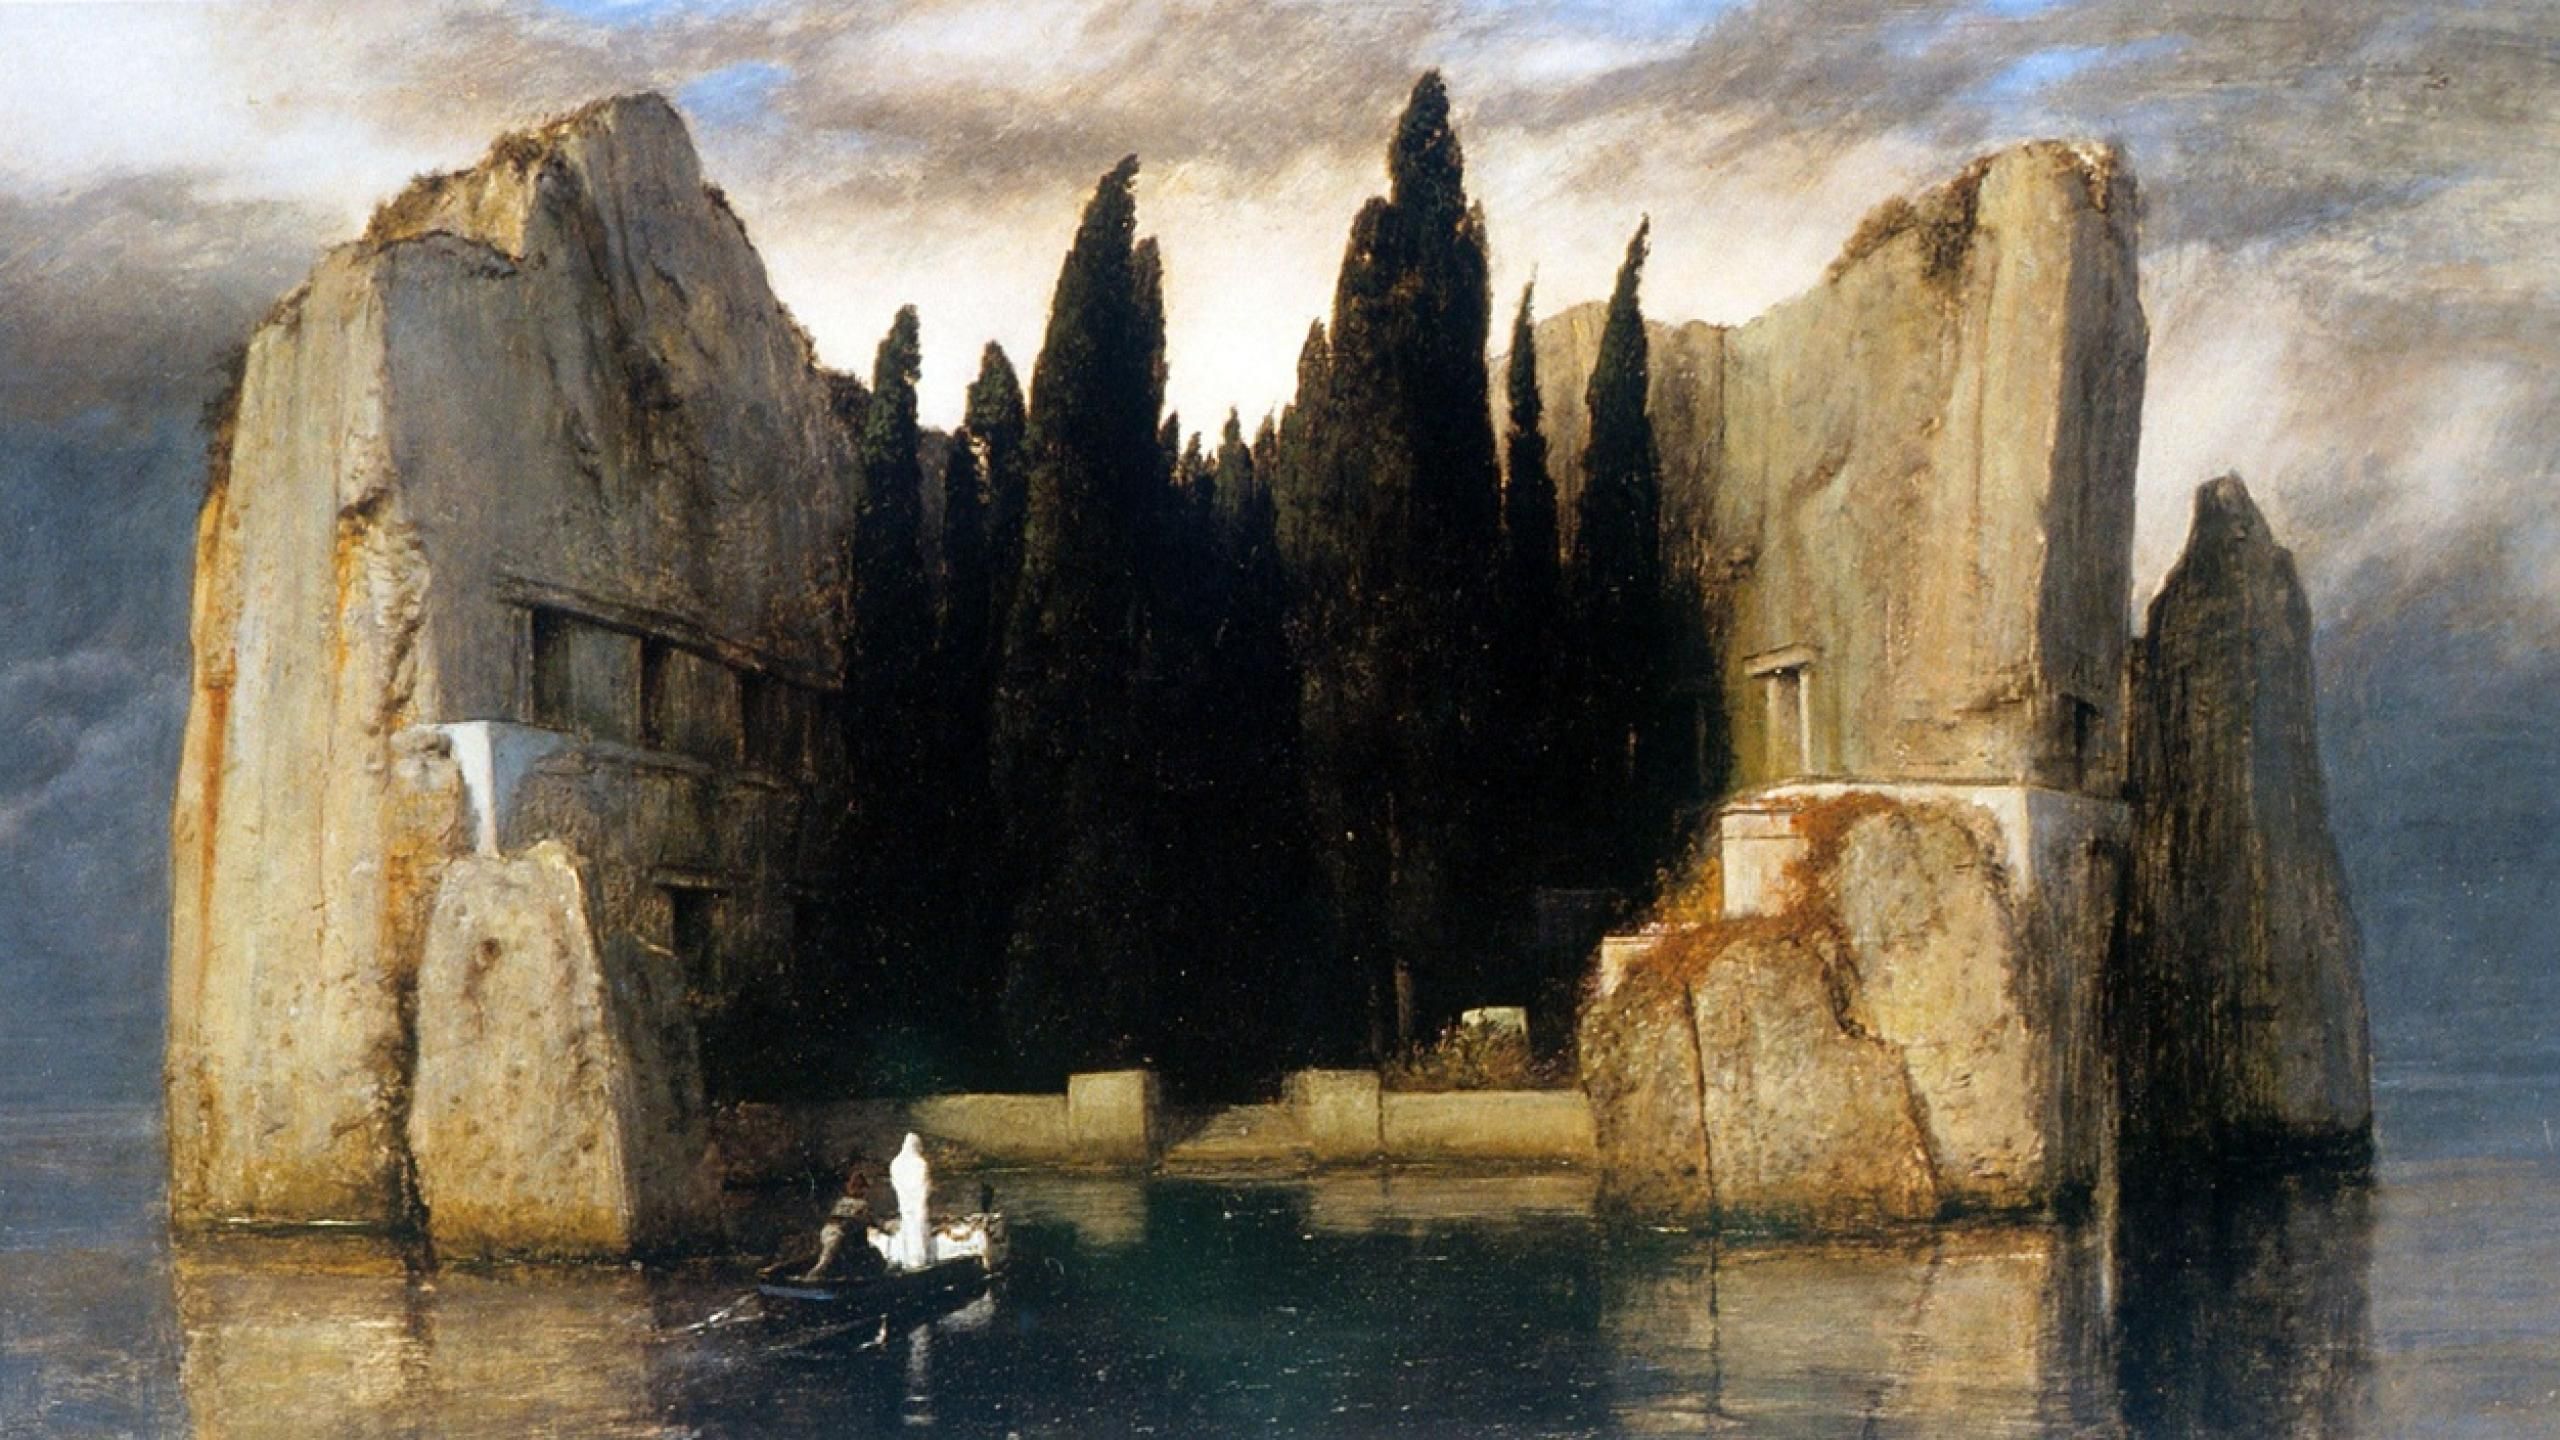 Arnold Böcklinl - The Isle of the Dead, 1880